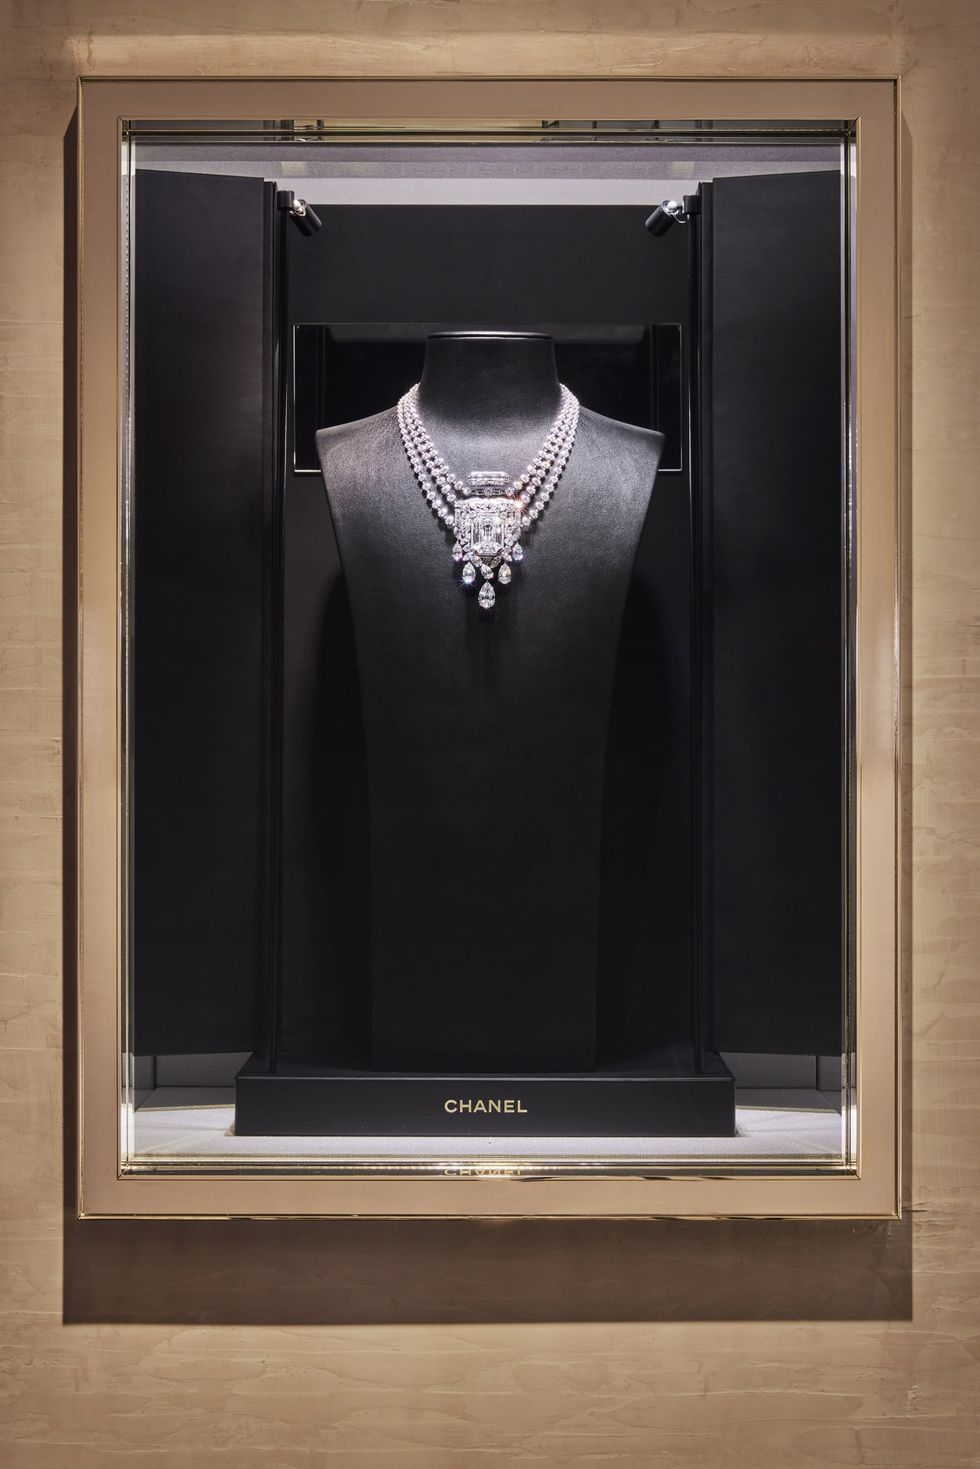 a black dress in a frame